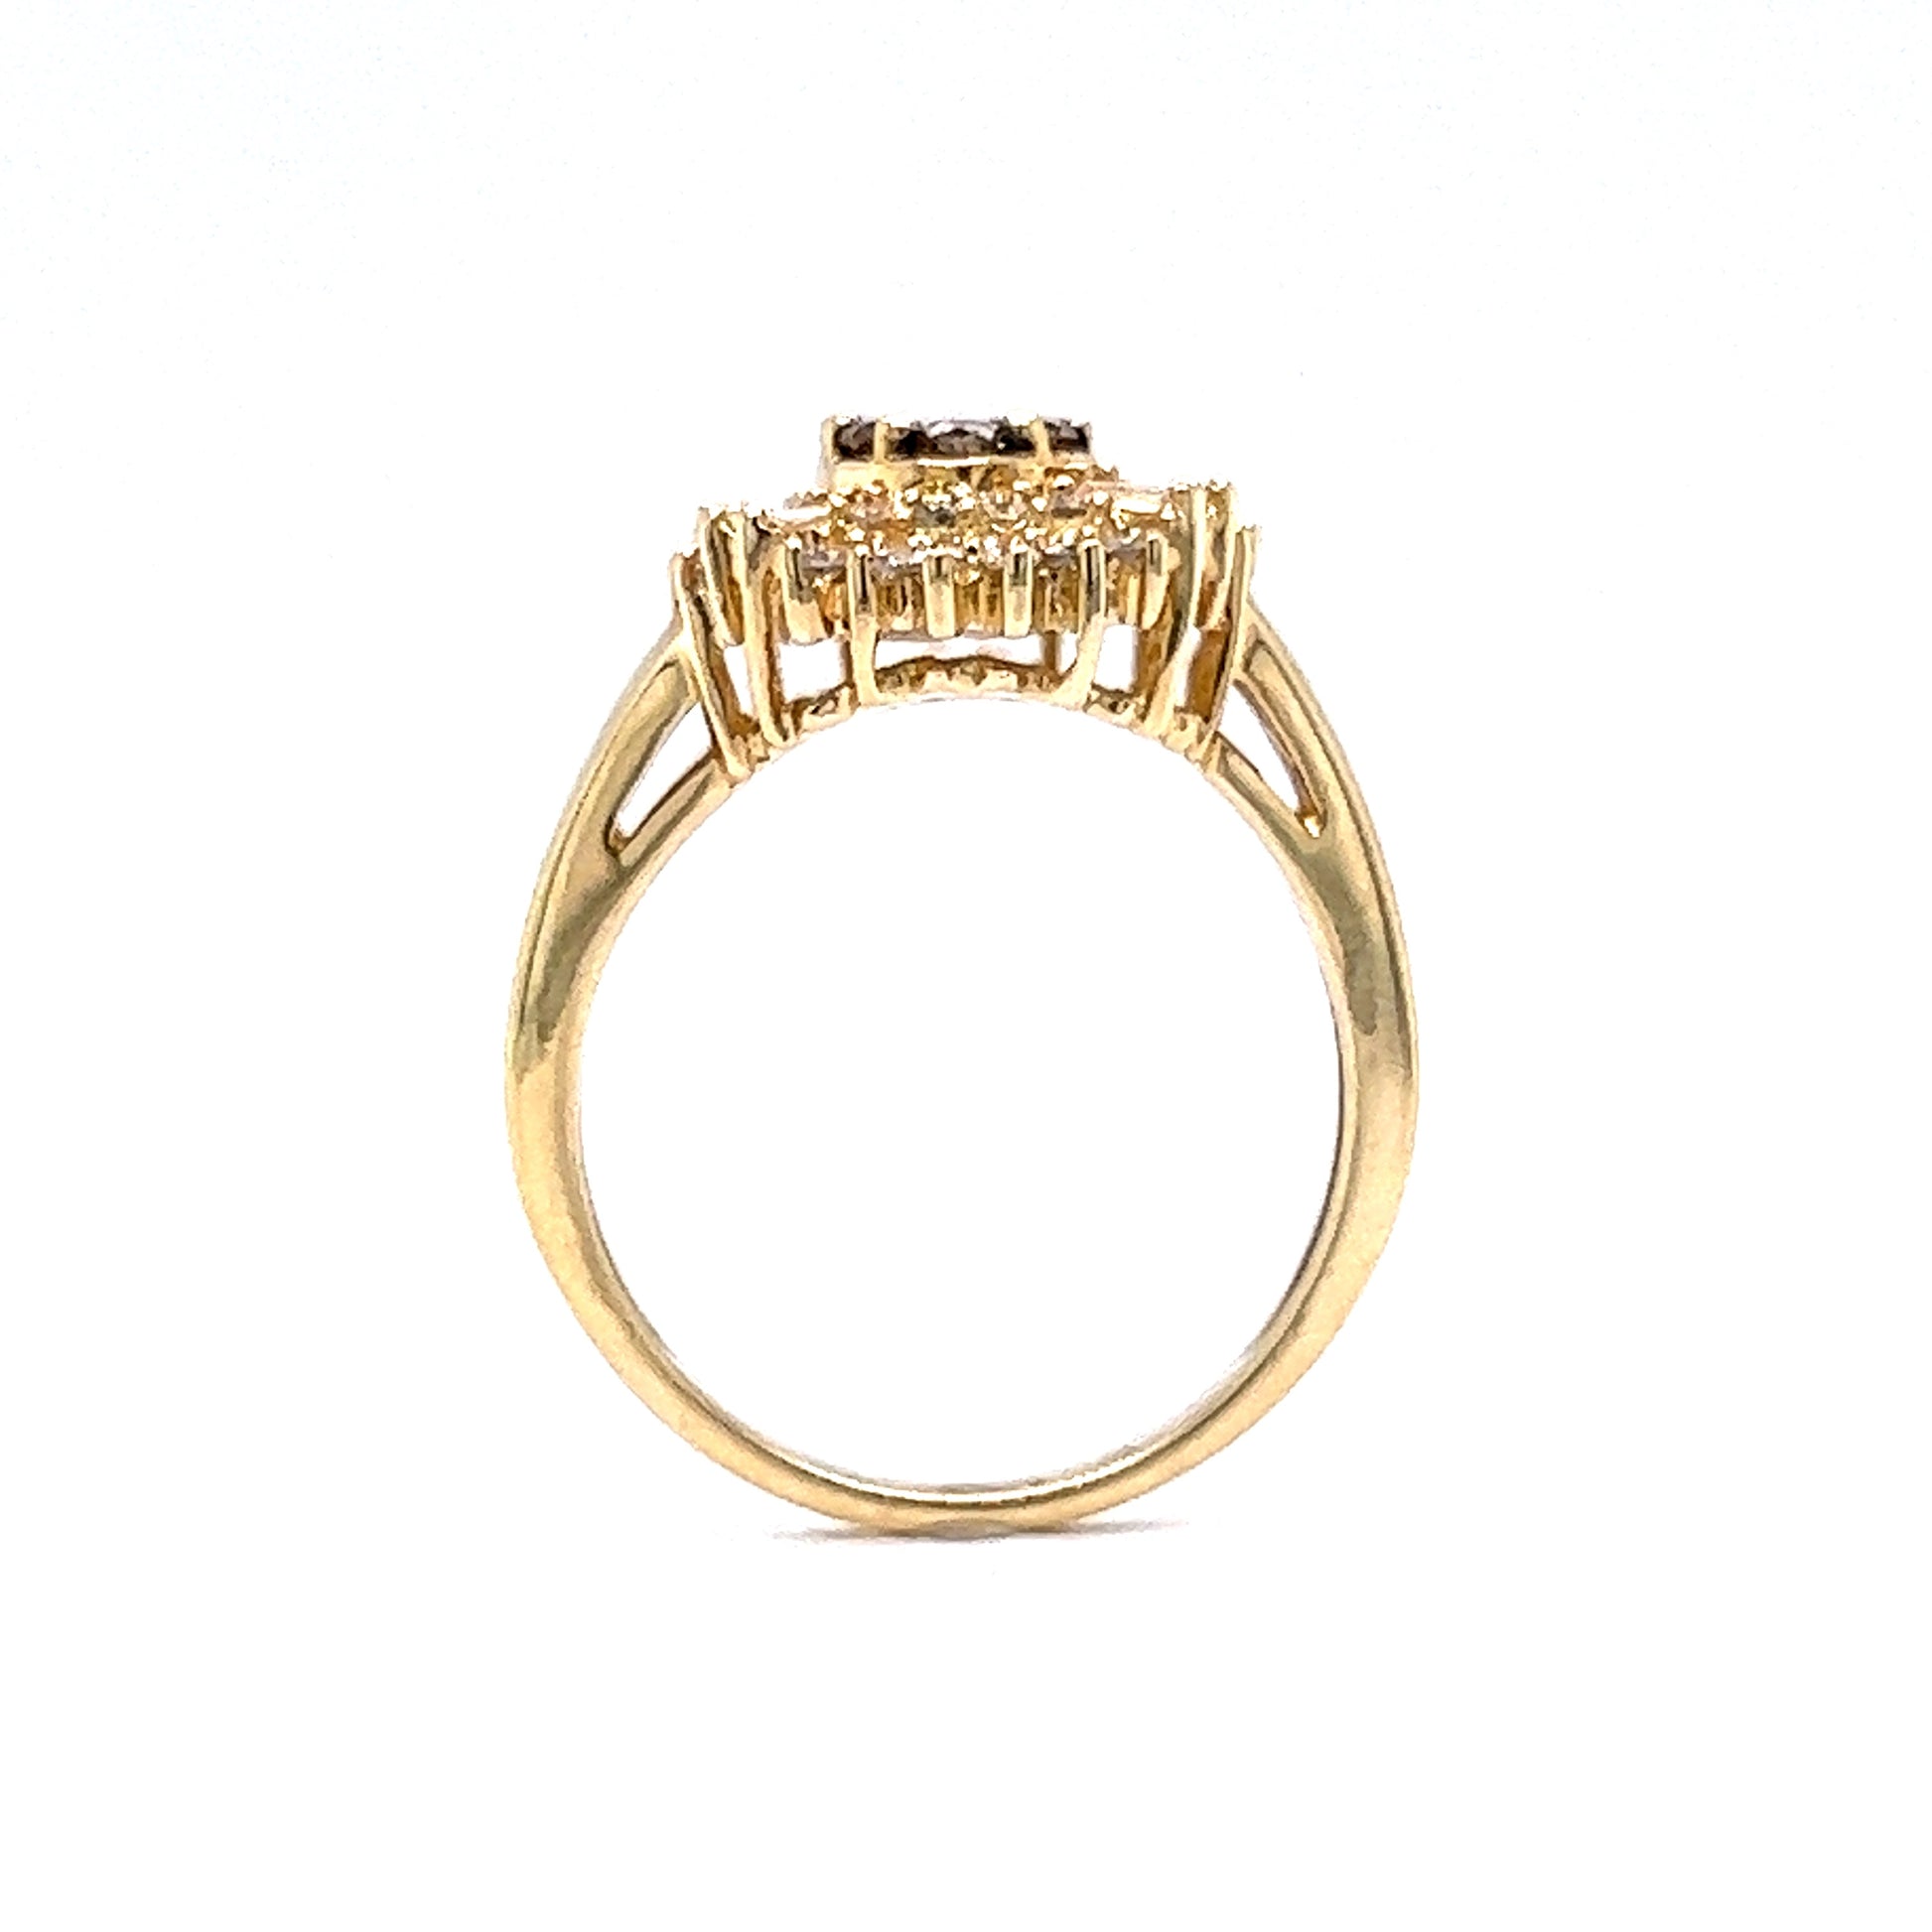 Effy Diamond Ballerina Ring in 14k Yellow GoldComposition: 14 Karat Yellow Gold Ring Size: 6.5 Total Diamond Weight: 1.36ct Total Gram Weight: 4.9 g Inscription: EFFY
      